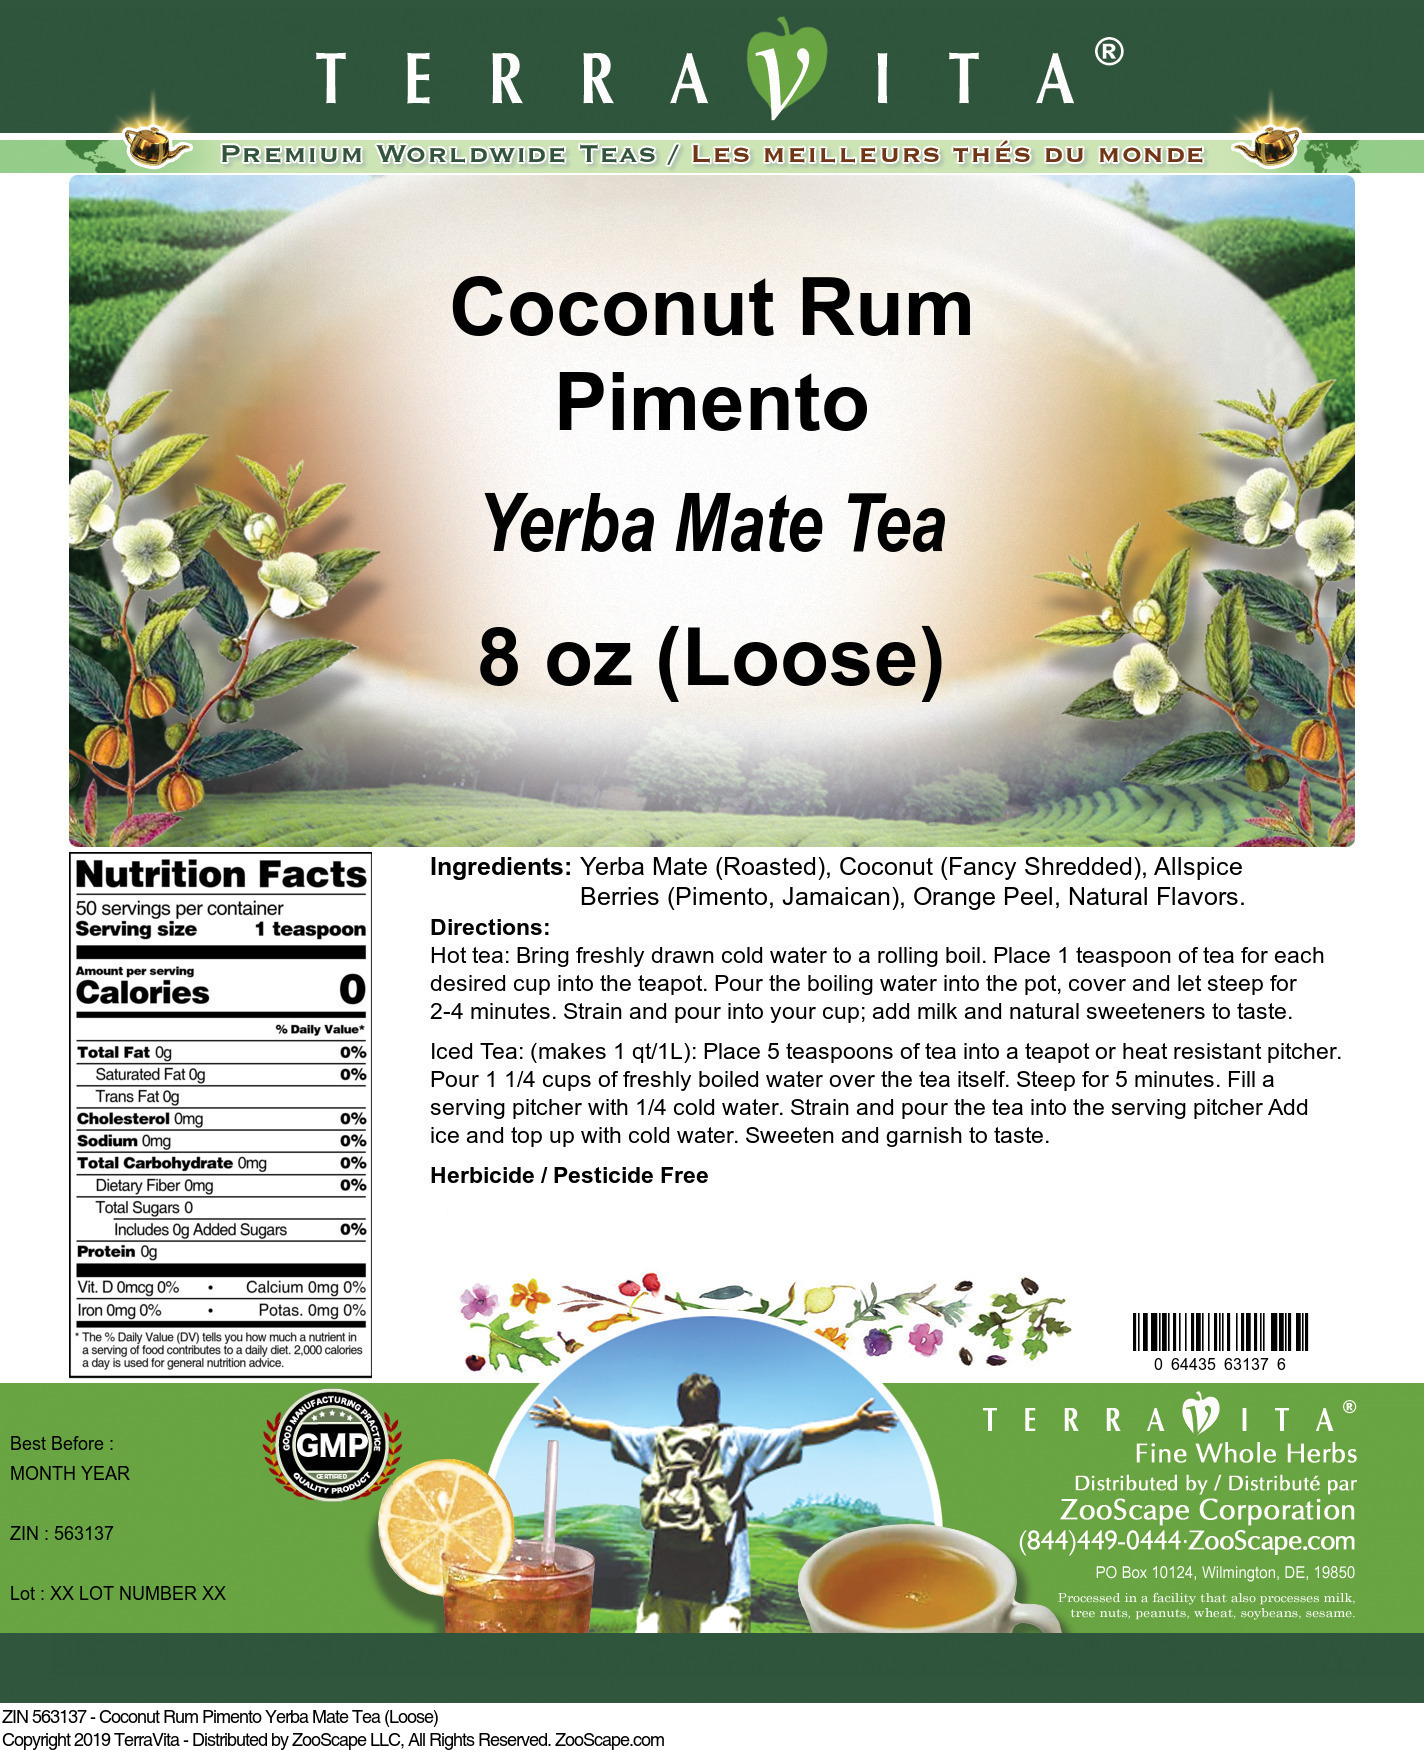 Coconut Rum Pimento Yerba Mate Tea (Loose) - Label